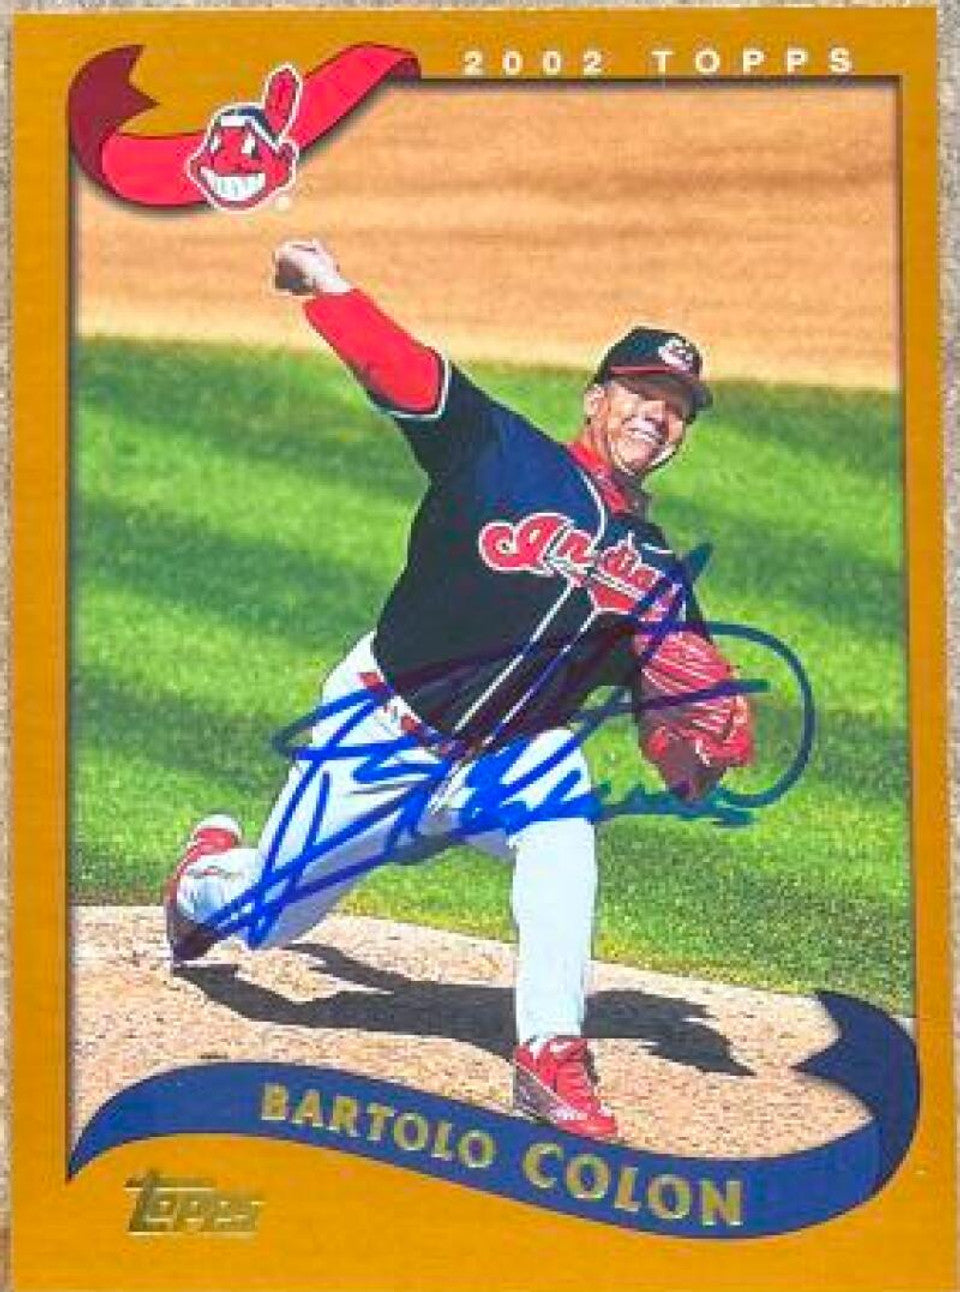 Bartolo Colon Signed 2002 Topps Baseball Card - Cleveland Indians